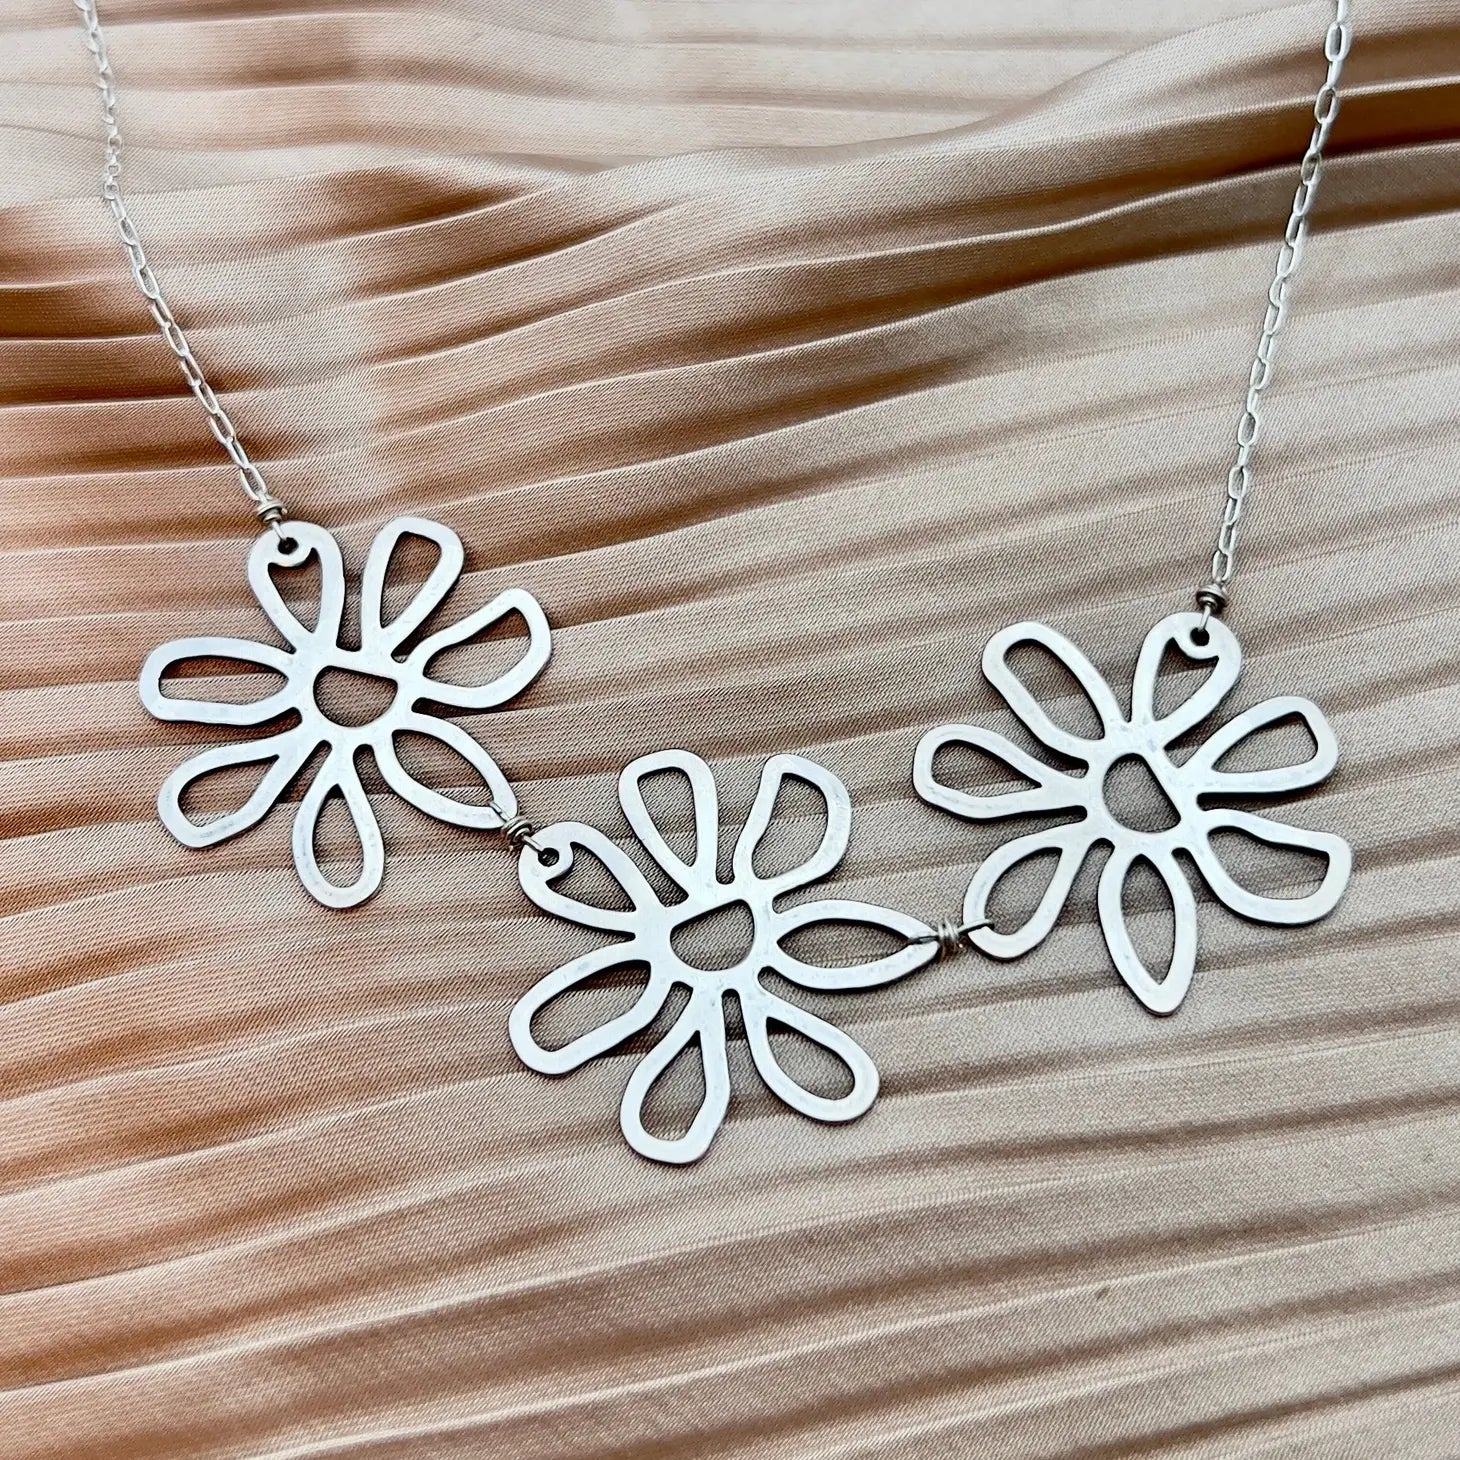 Fluff Hardware -Handmade Flower Power Necklace